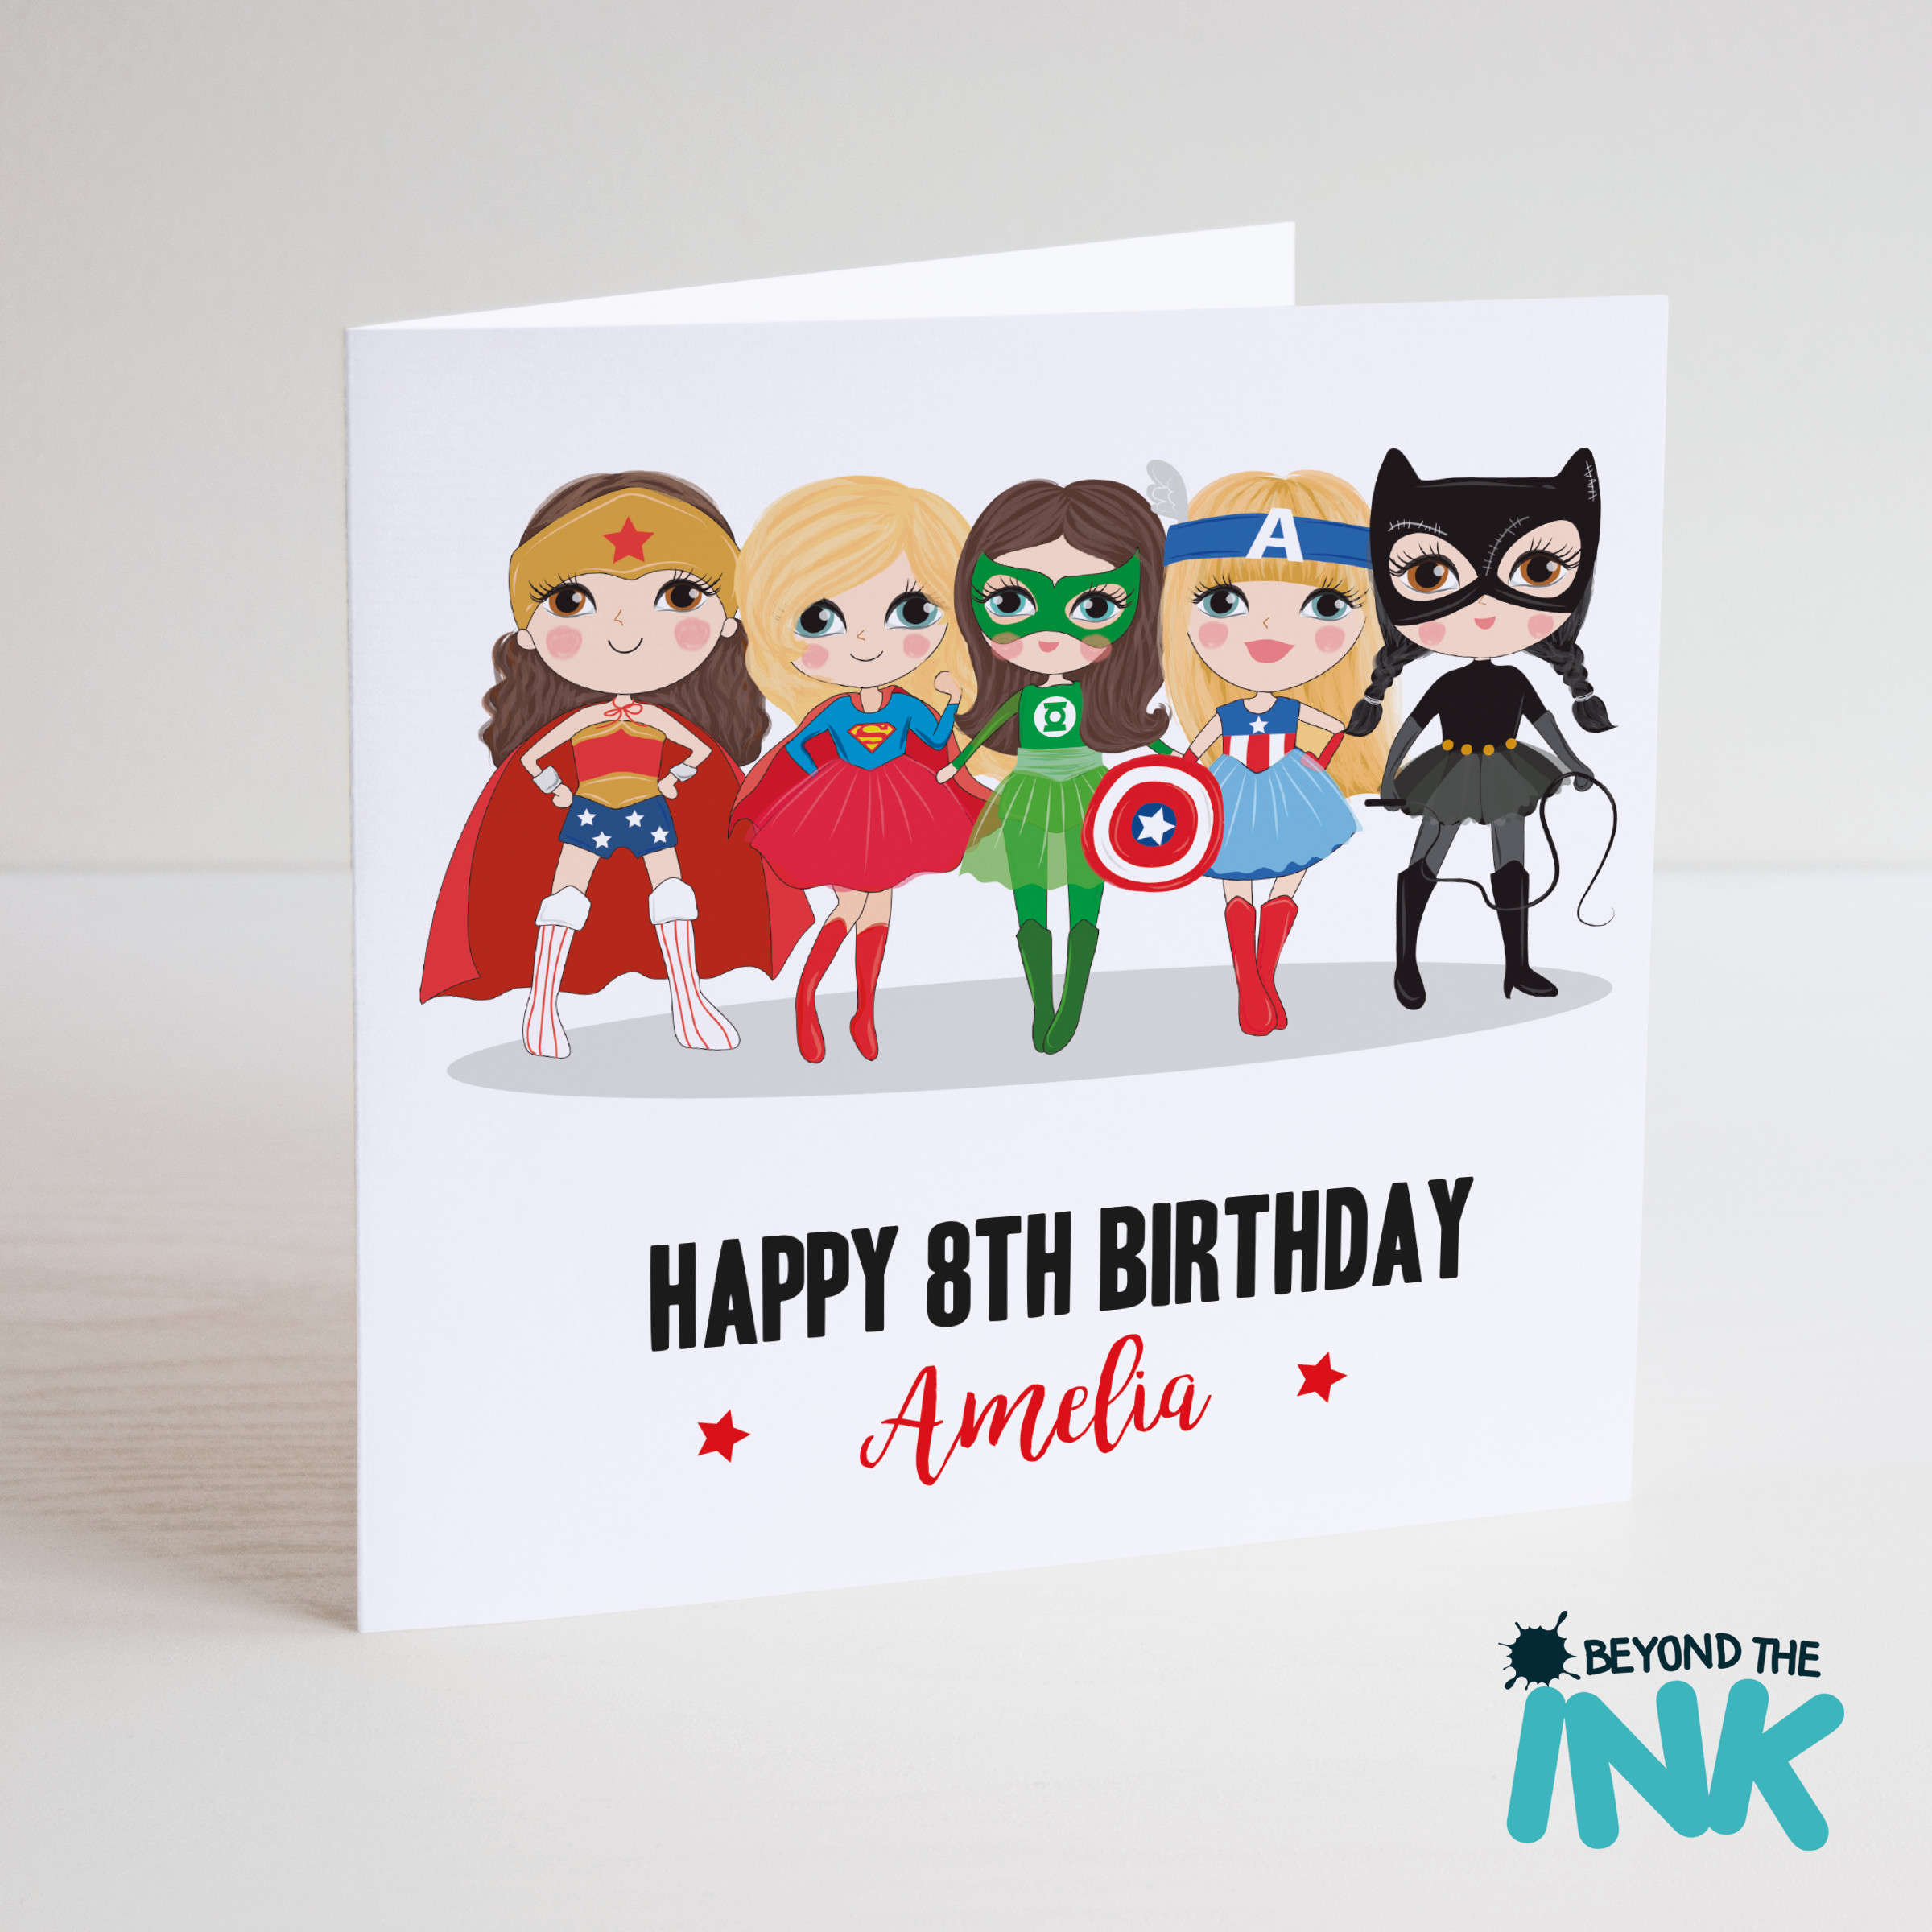 Best ideas about Superhero Birthday Card
. Save or Pin Personalised Superhero Girl Birthday Card Now.